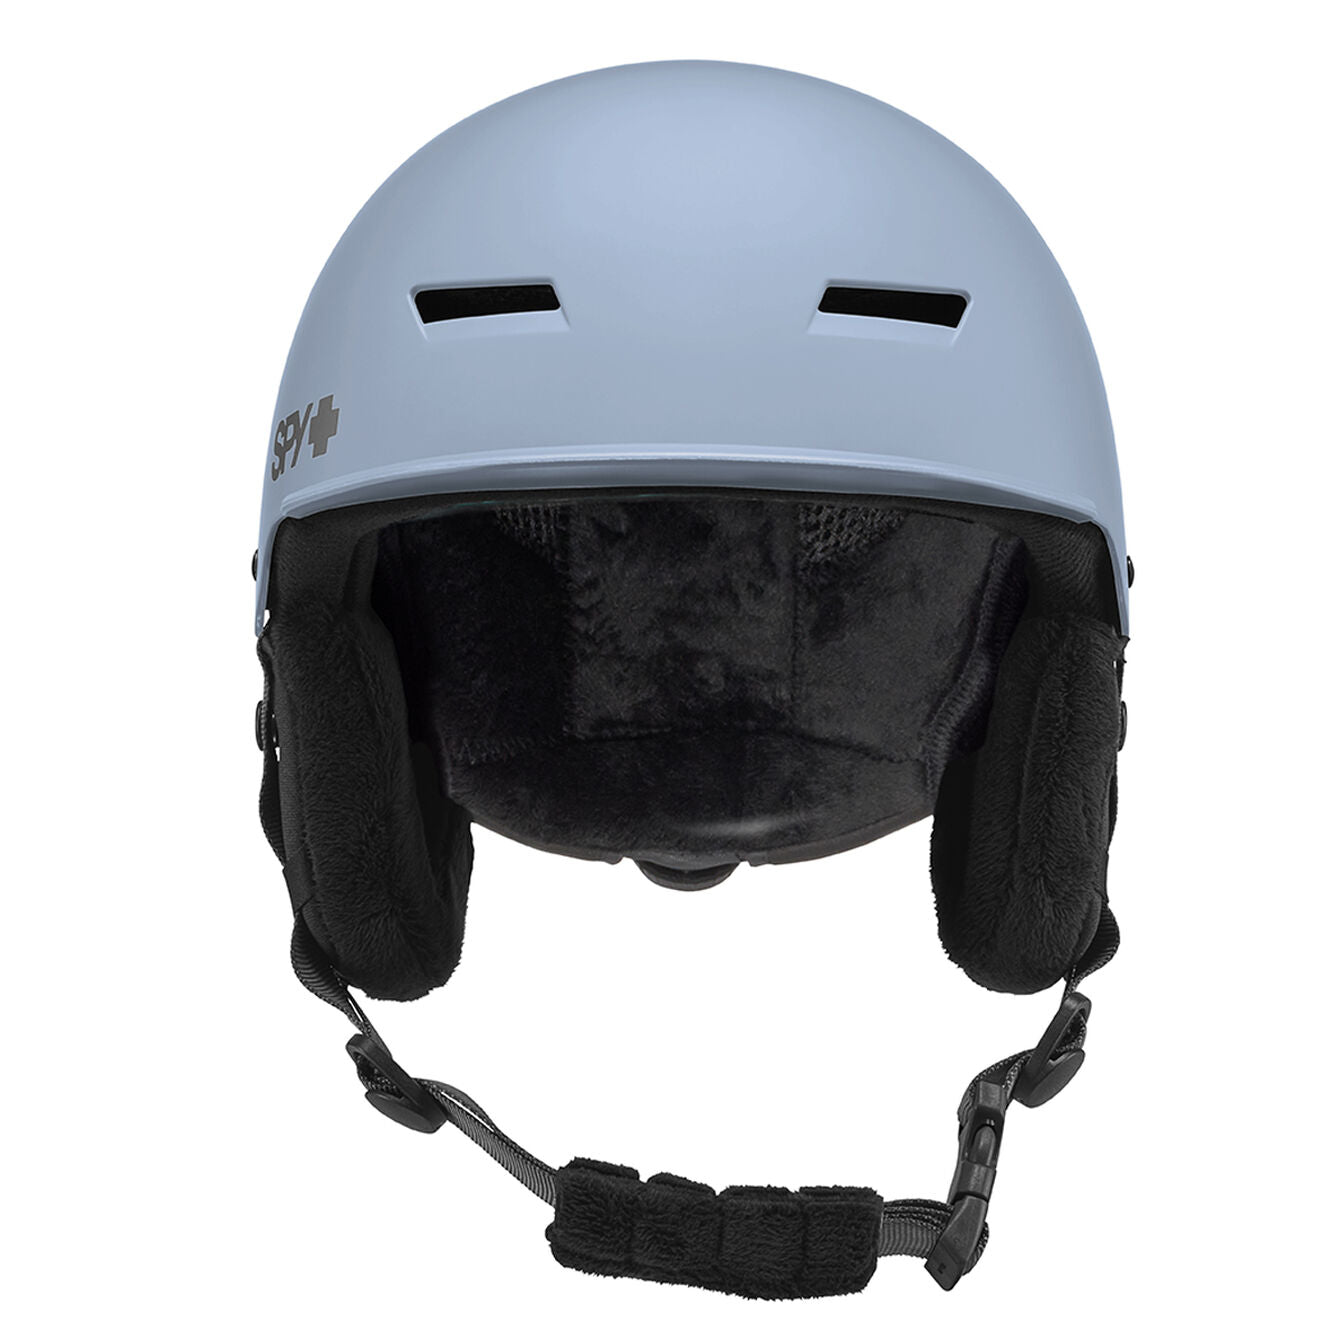 Spy Youth LIL GALACTIC MIPS Snowboard Helmet 2024